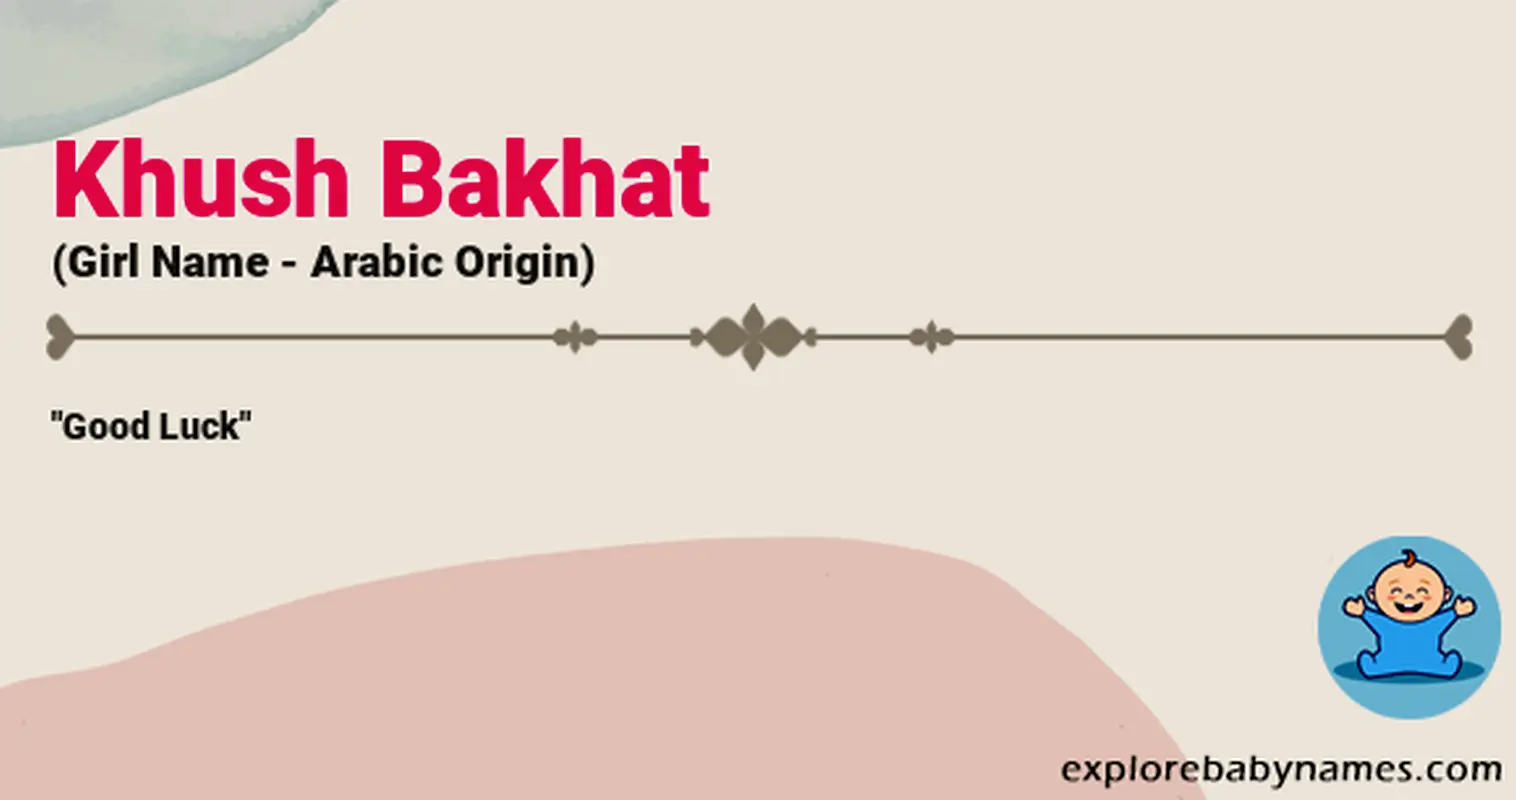 Meaning of Khush Bakhat